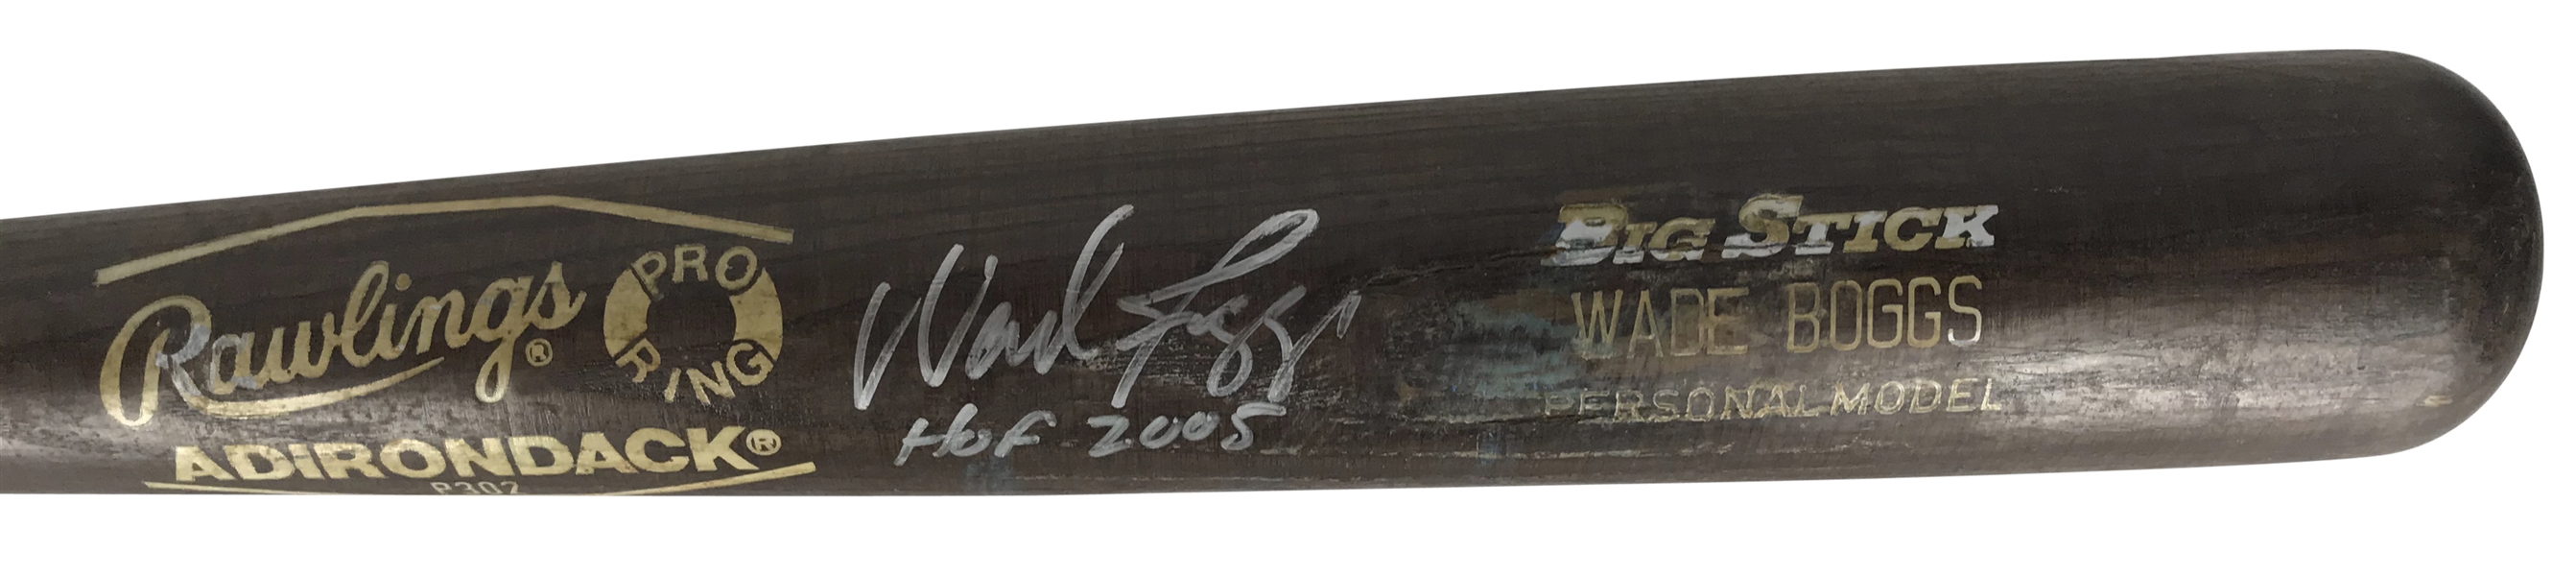 Wade Boggs Signed & Game Used Early 1984 288RJ Baseball Bat - PSA/DNA GU 9.5!